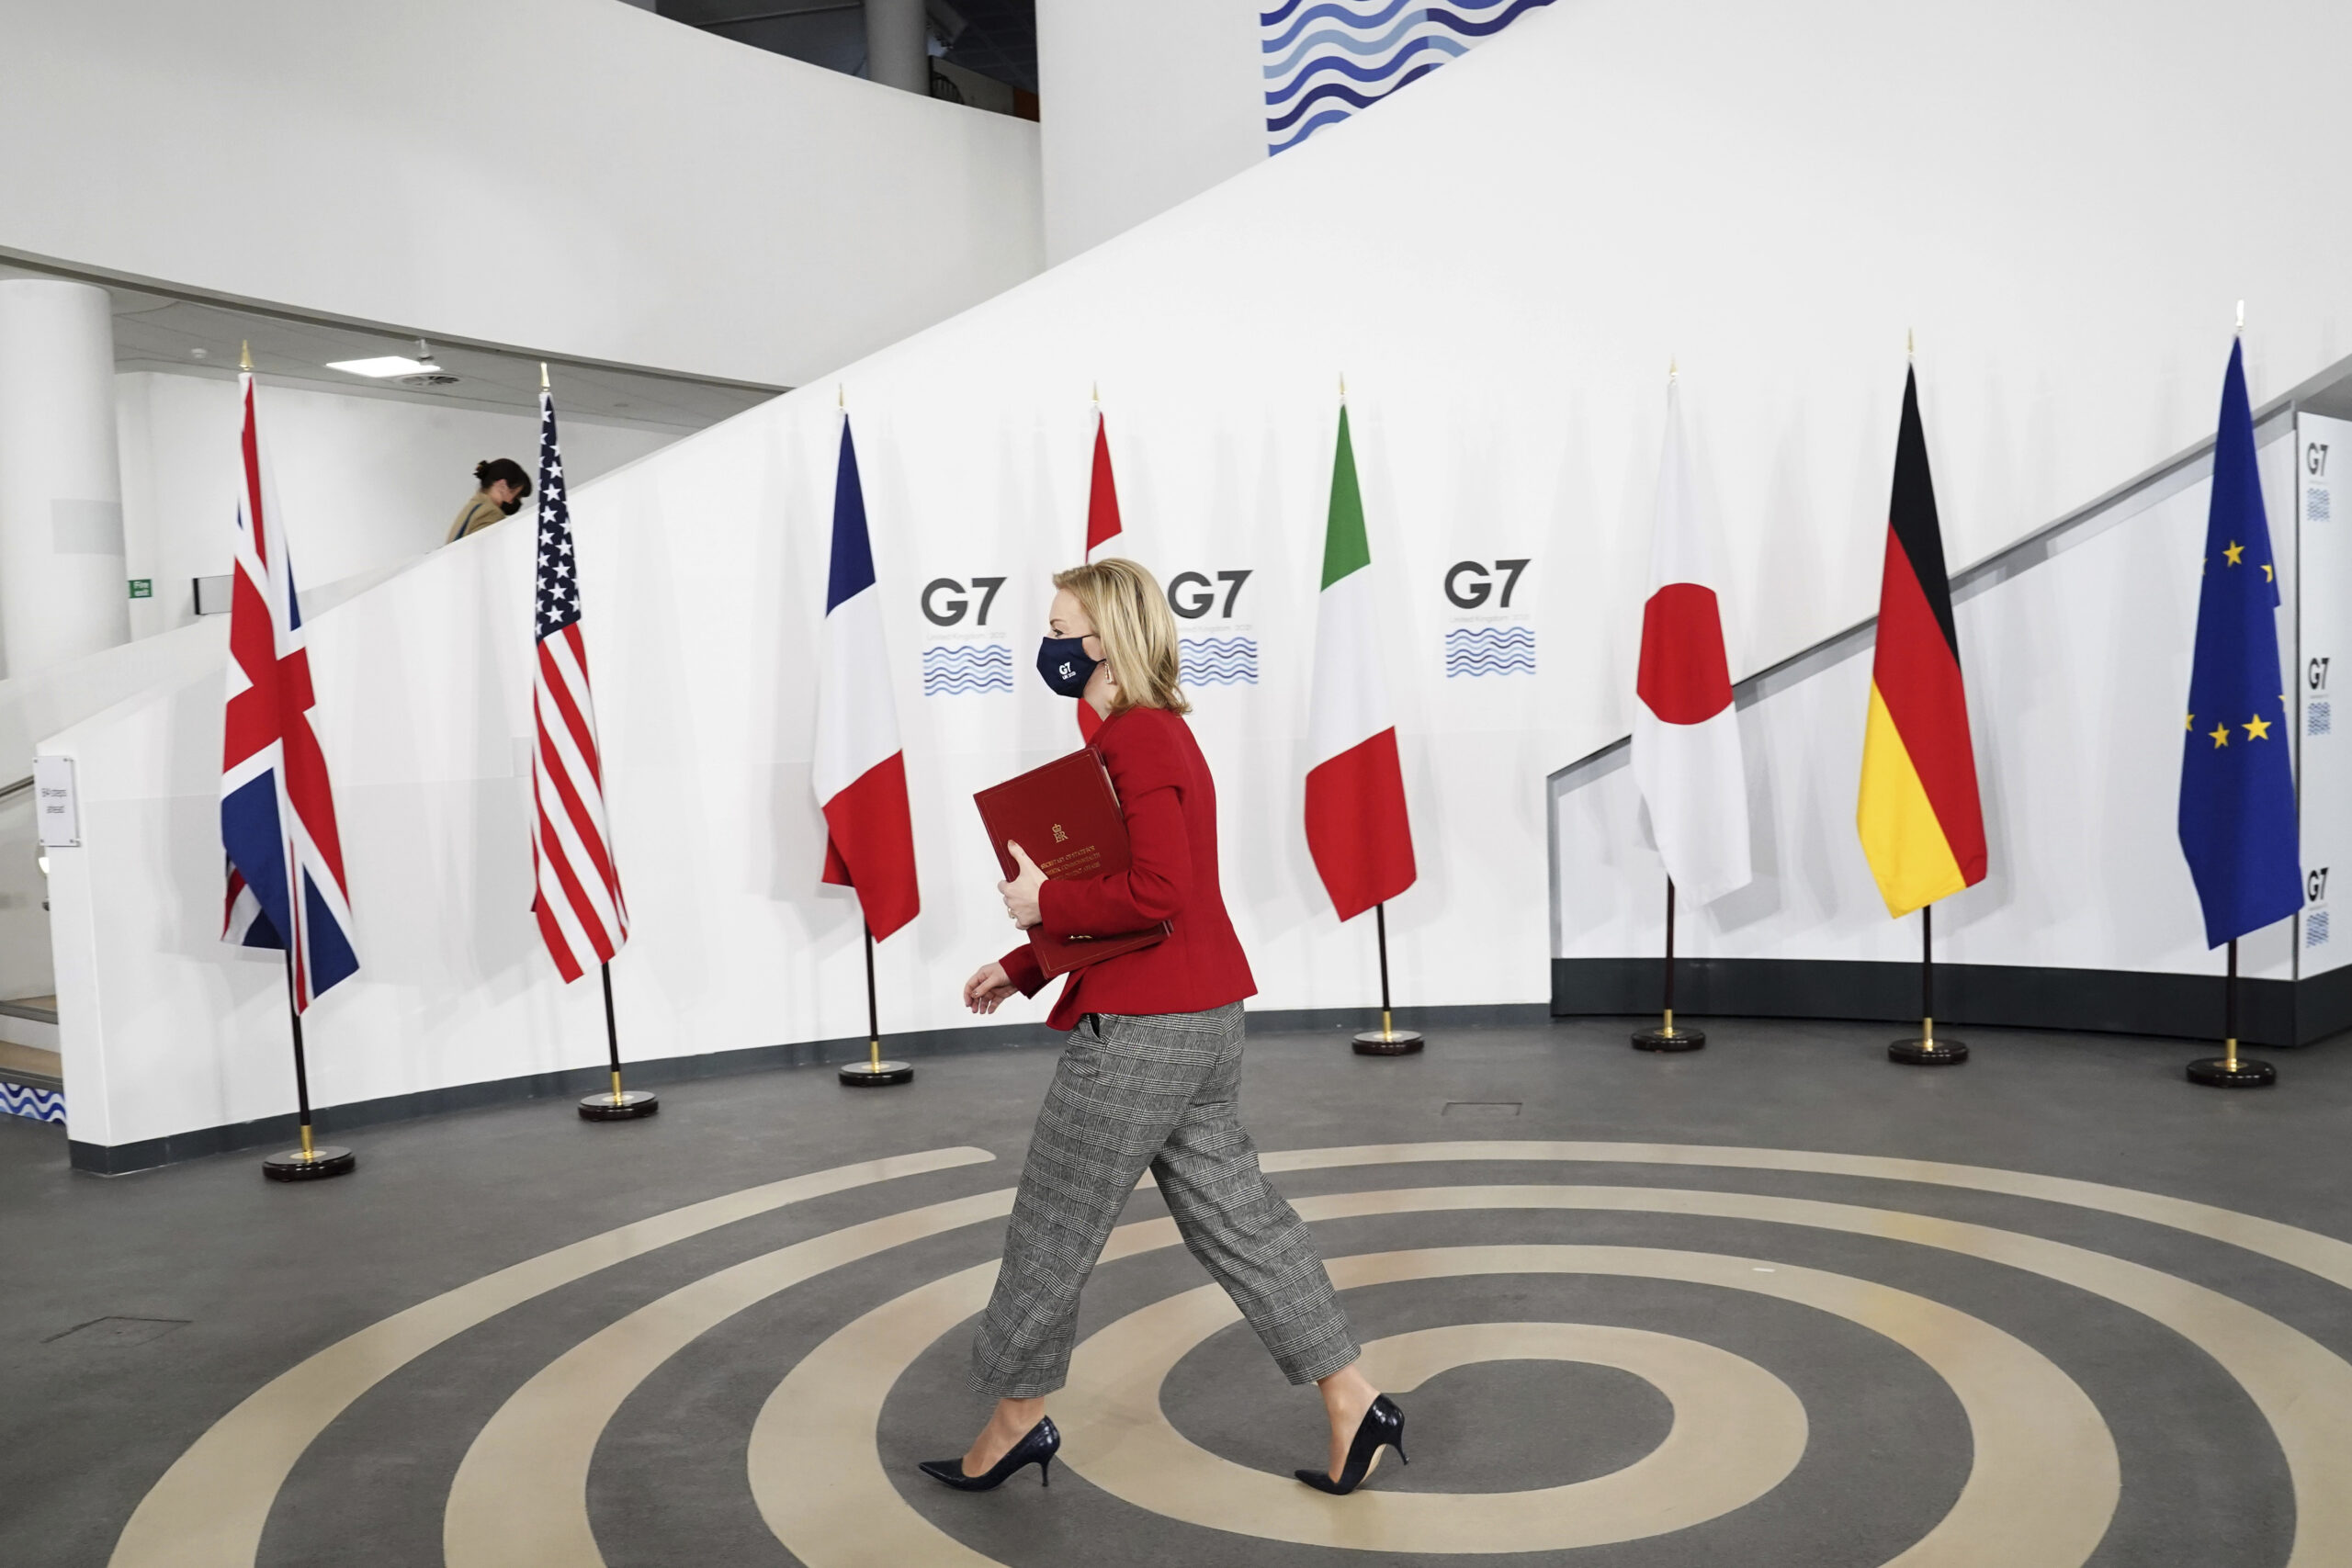 G7: Ξεκινά η τηλεδιάσκεψη των ηγετών της με θέμα συζήτησης τις εξελίξεις στη Μέση Ανατολή